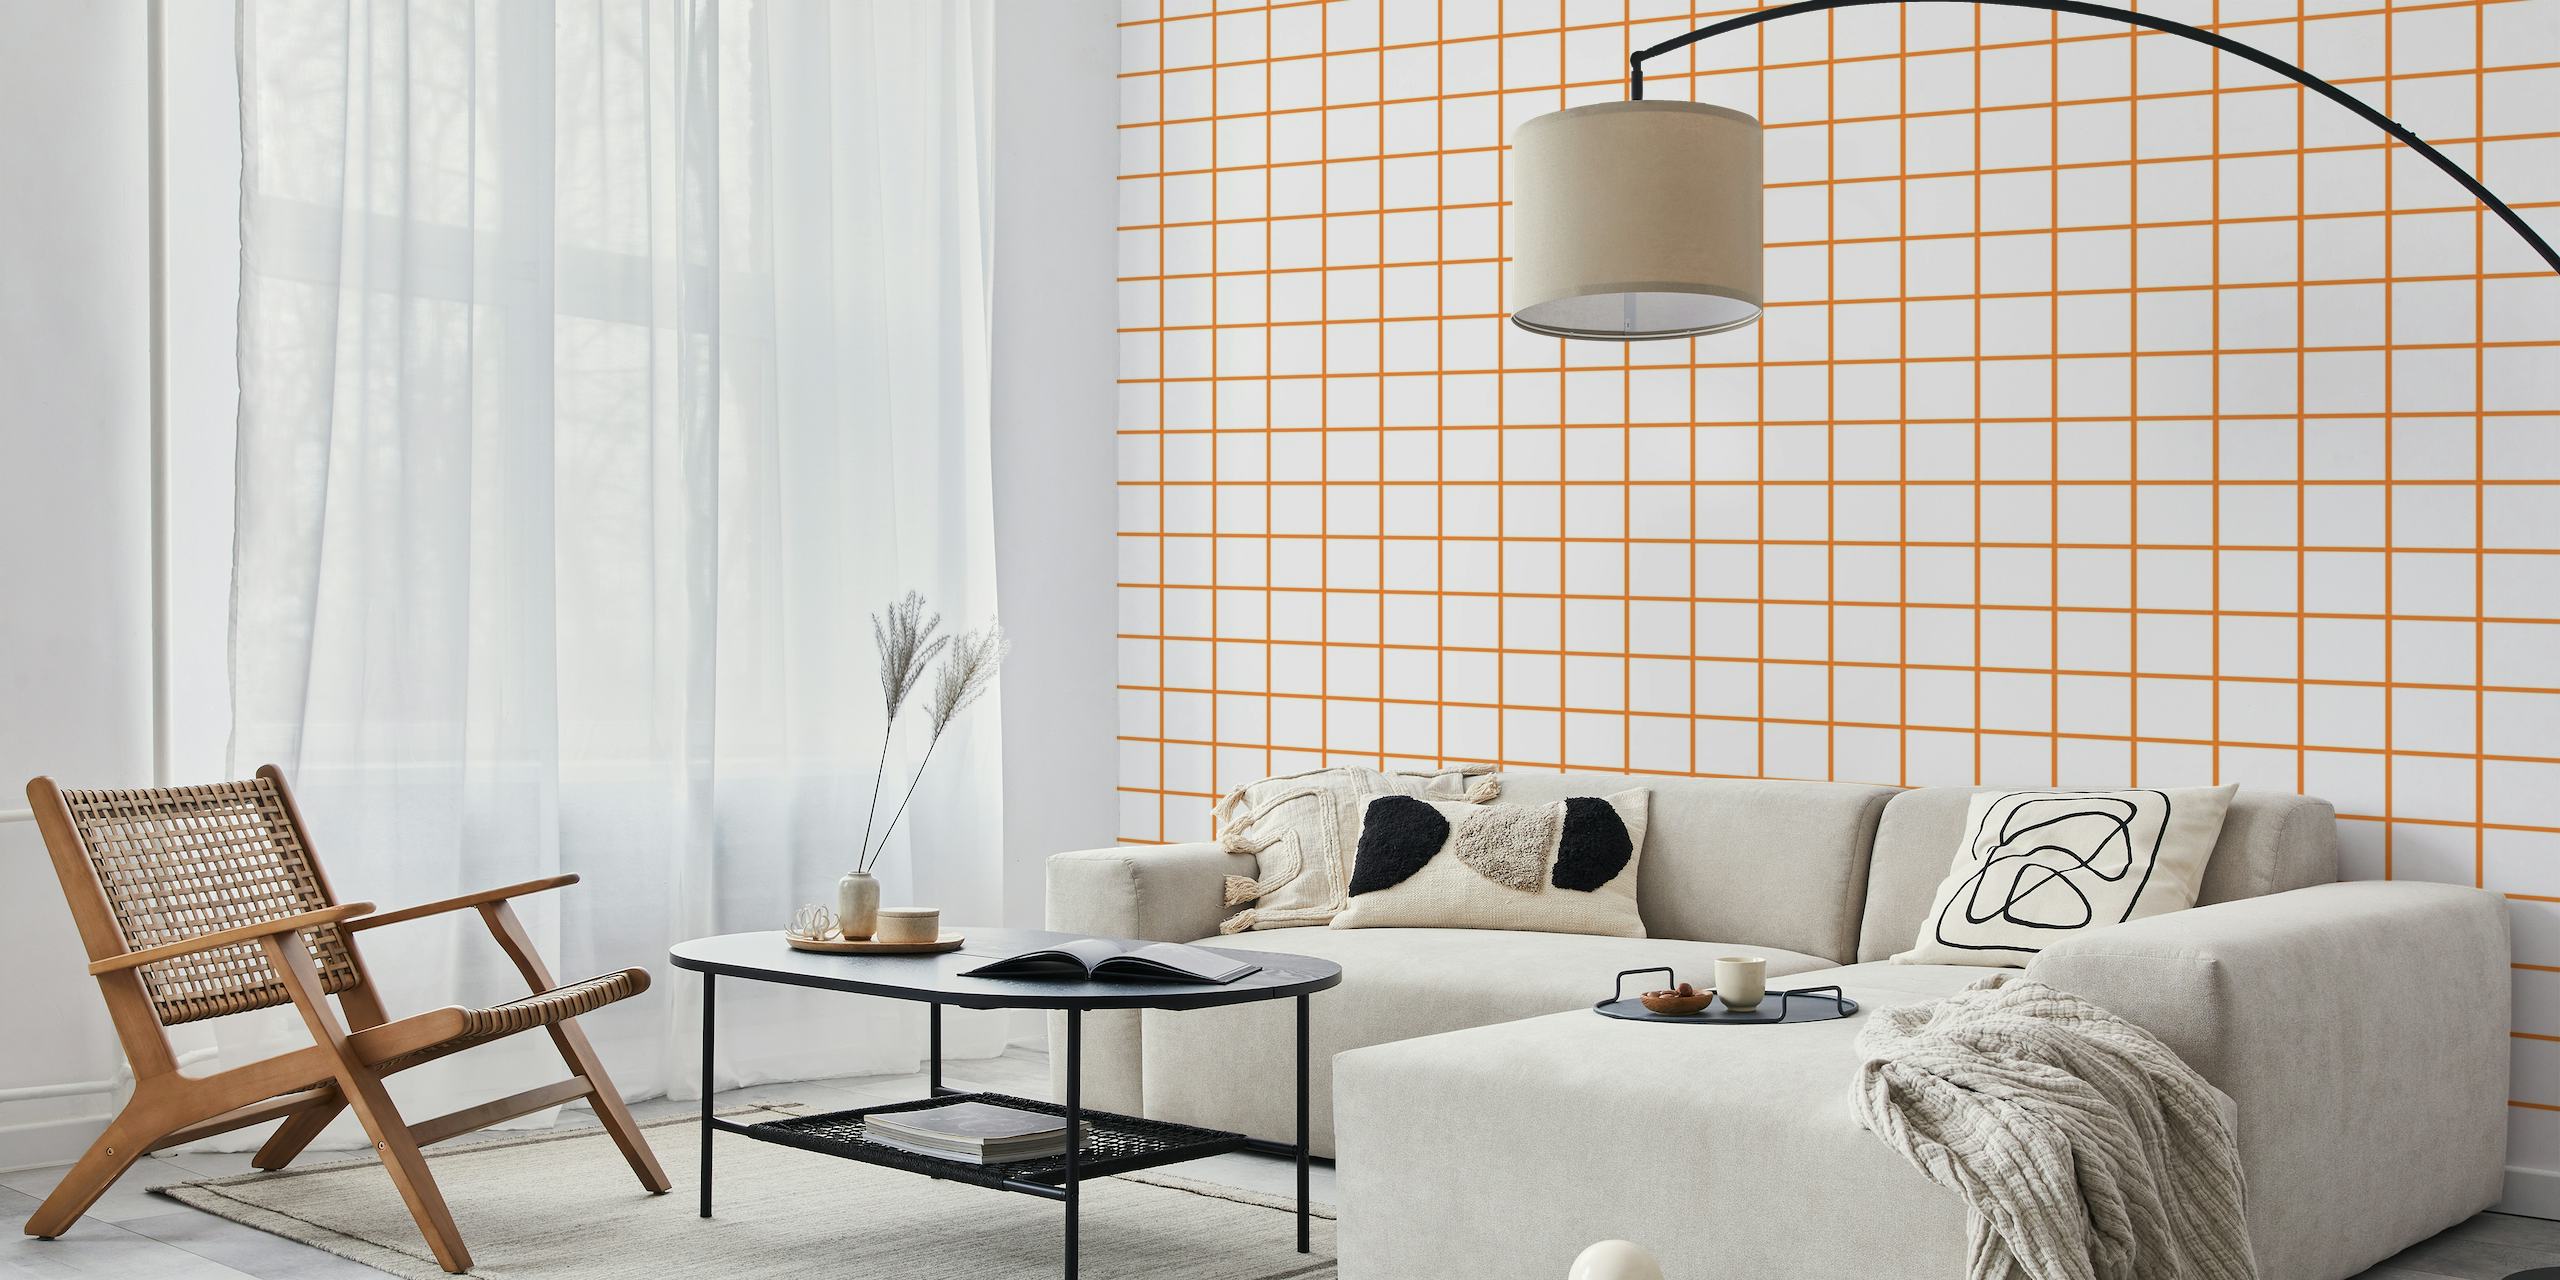 Orange on white grid wallpaper